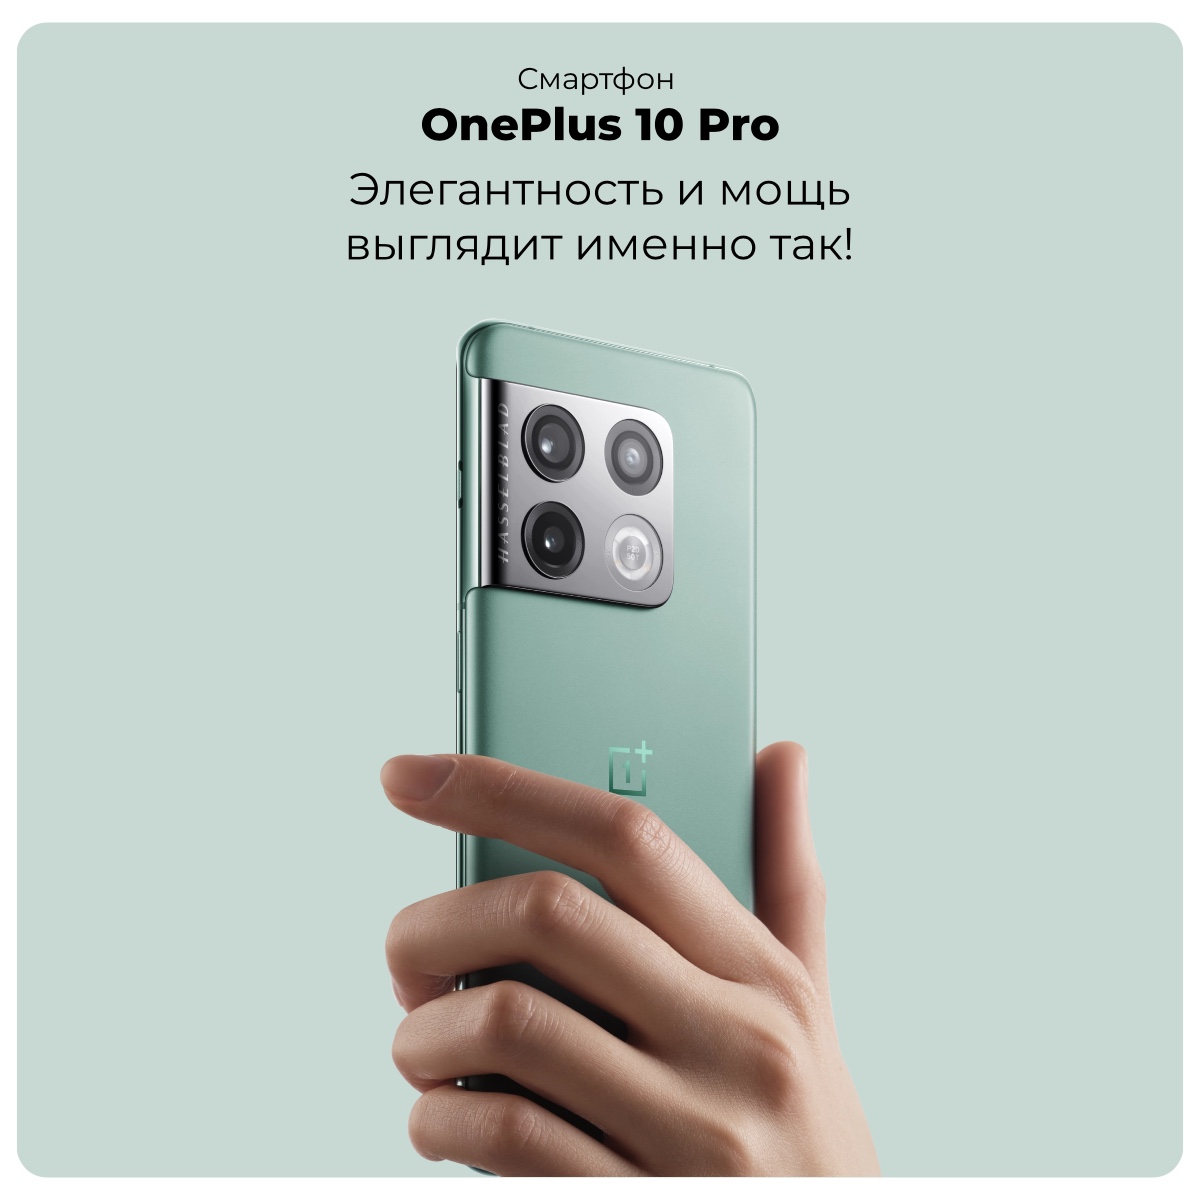 OnePlus-10-Pro-01